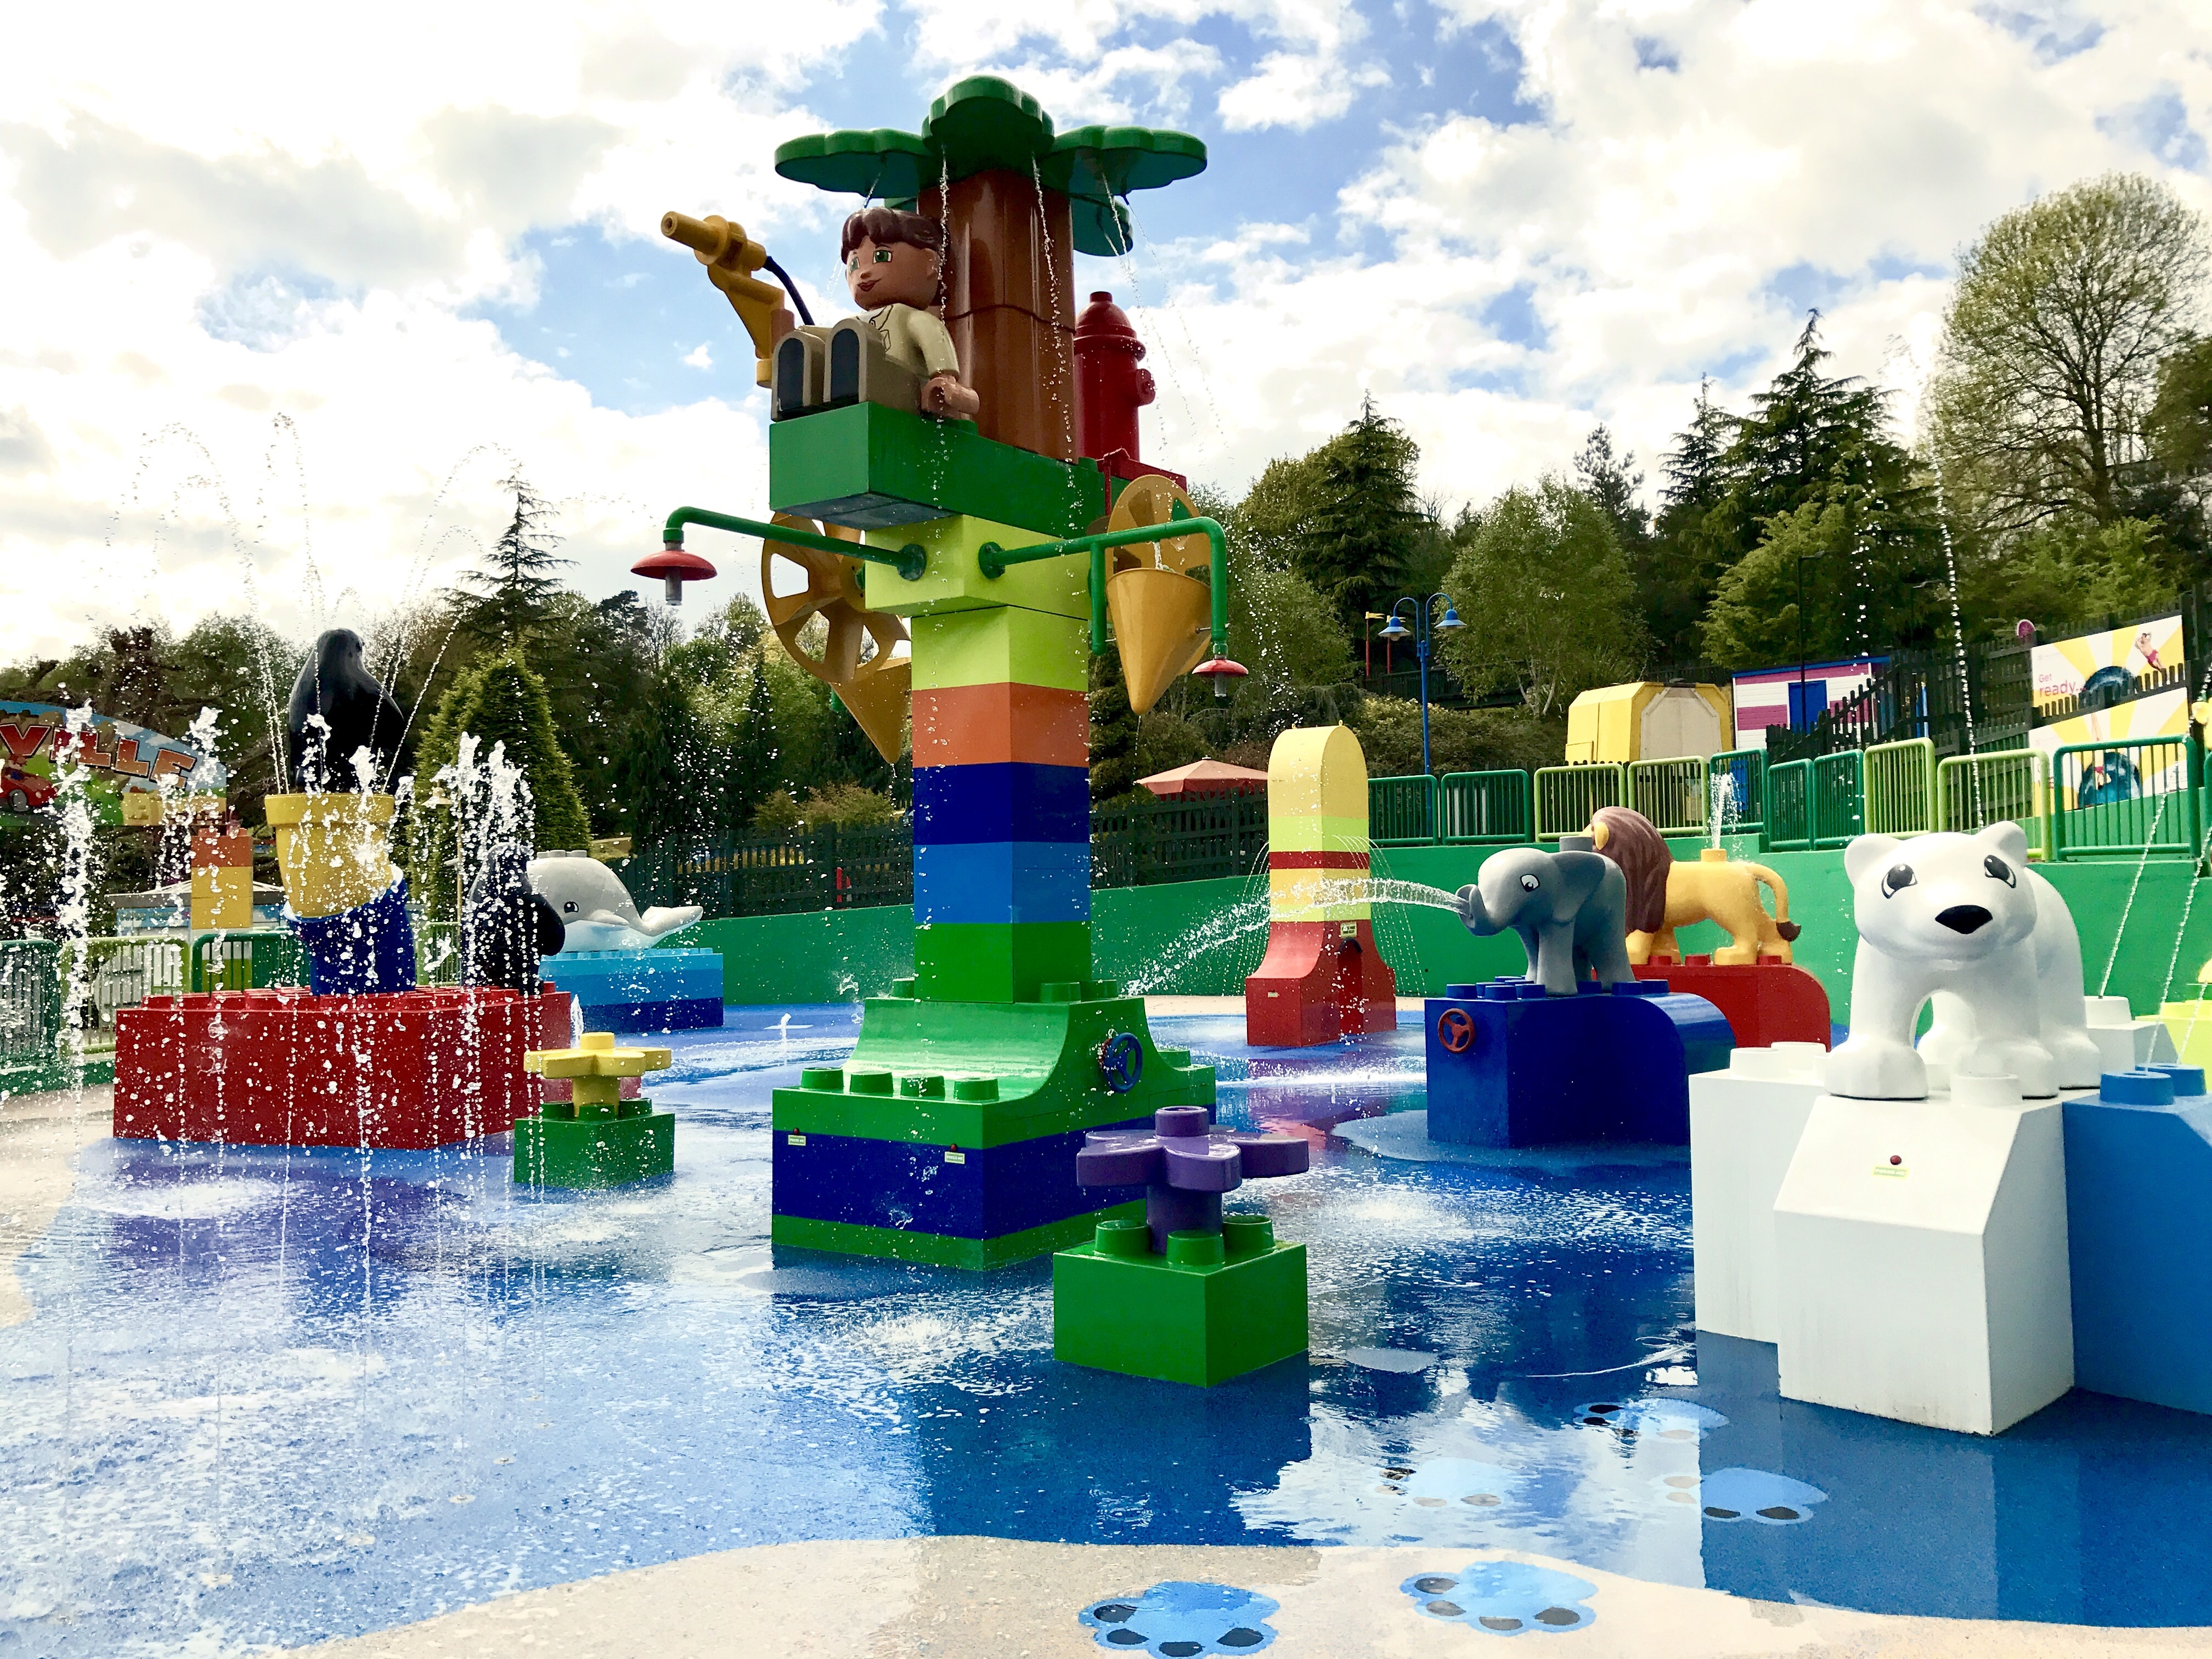 Top tips Legoland Windsor